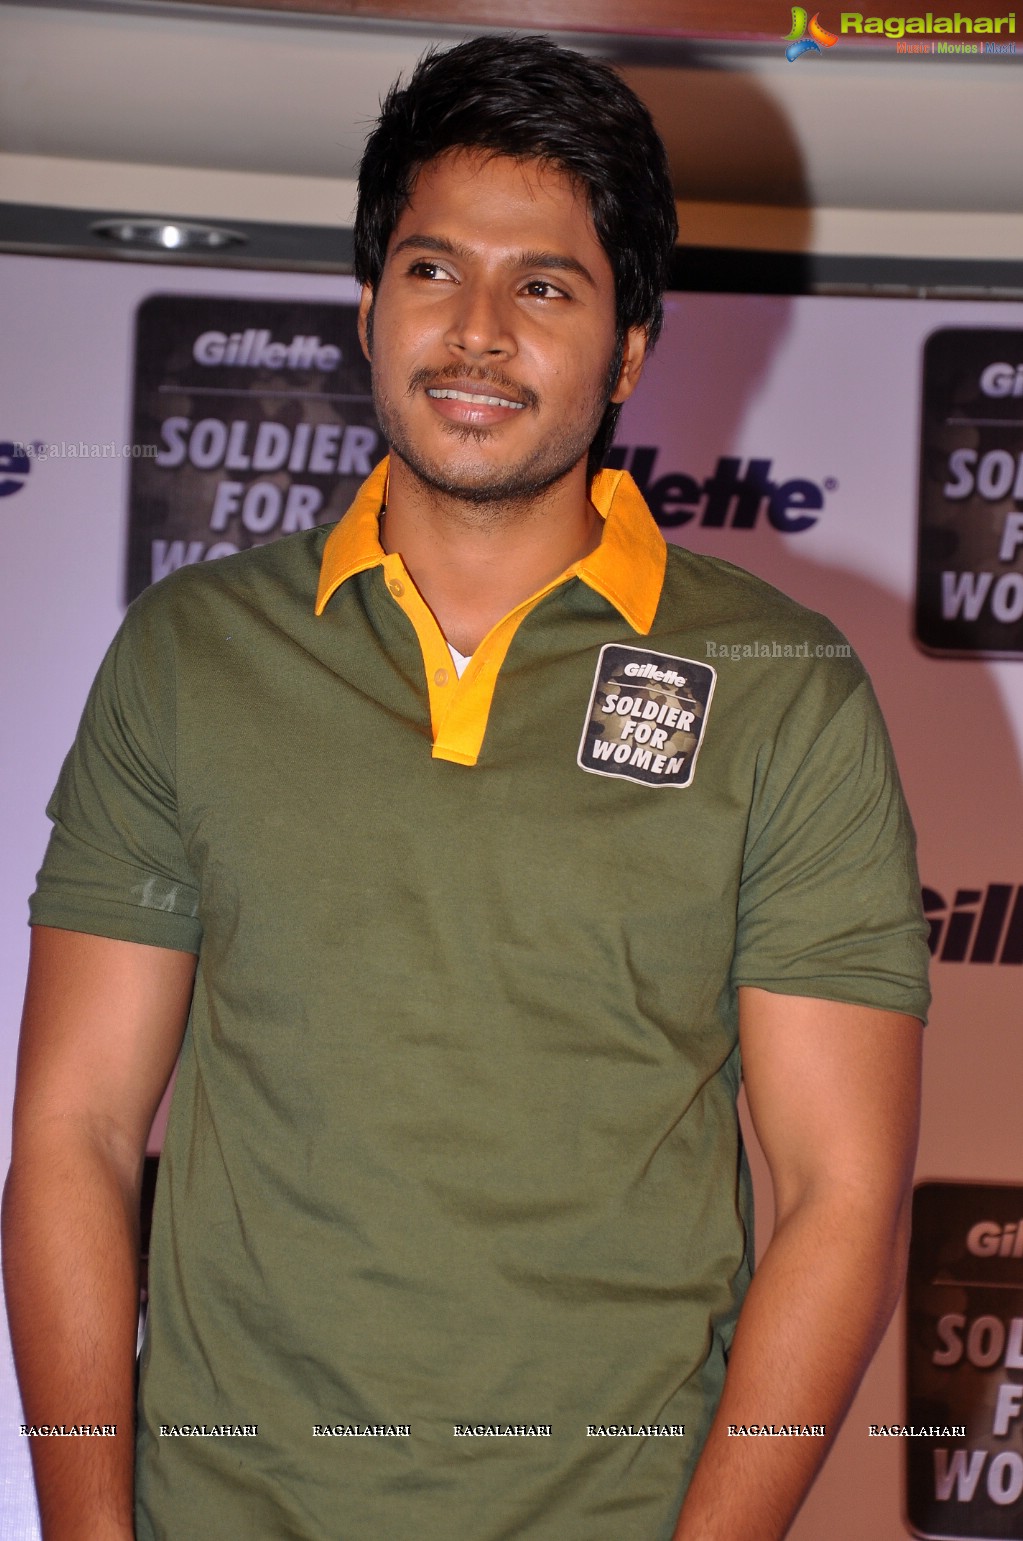 Gillette Soldier for Women Event, Hyderabad